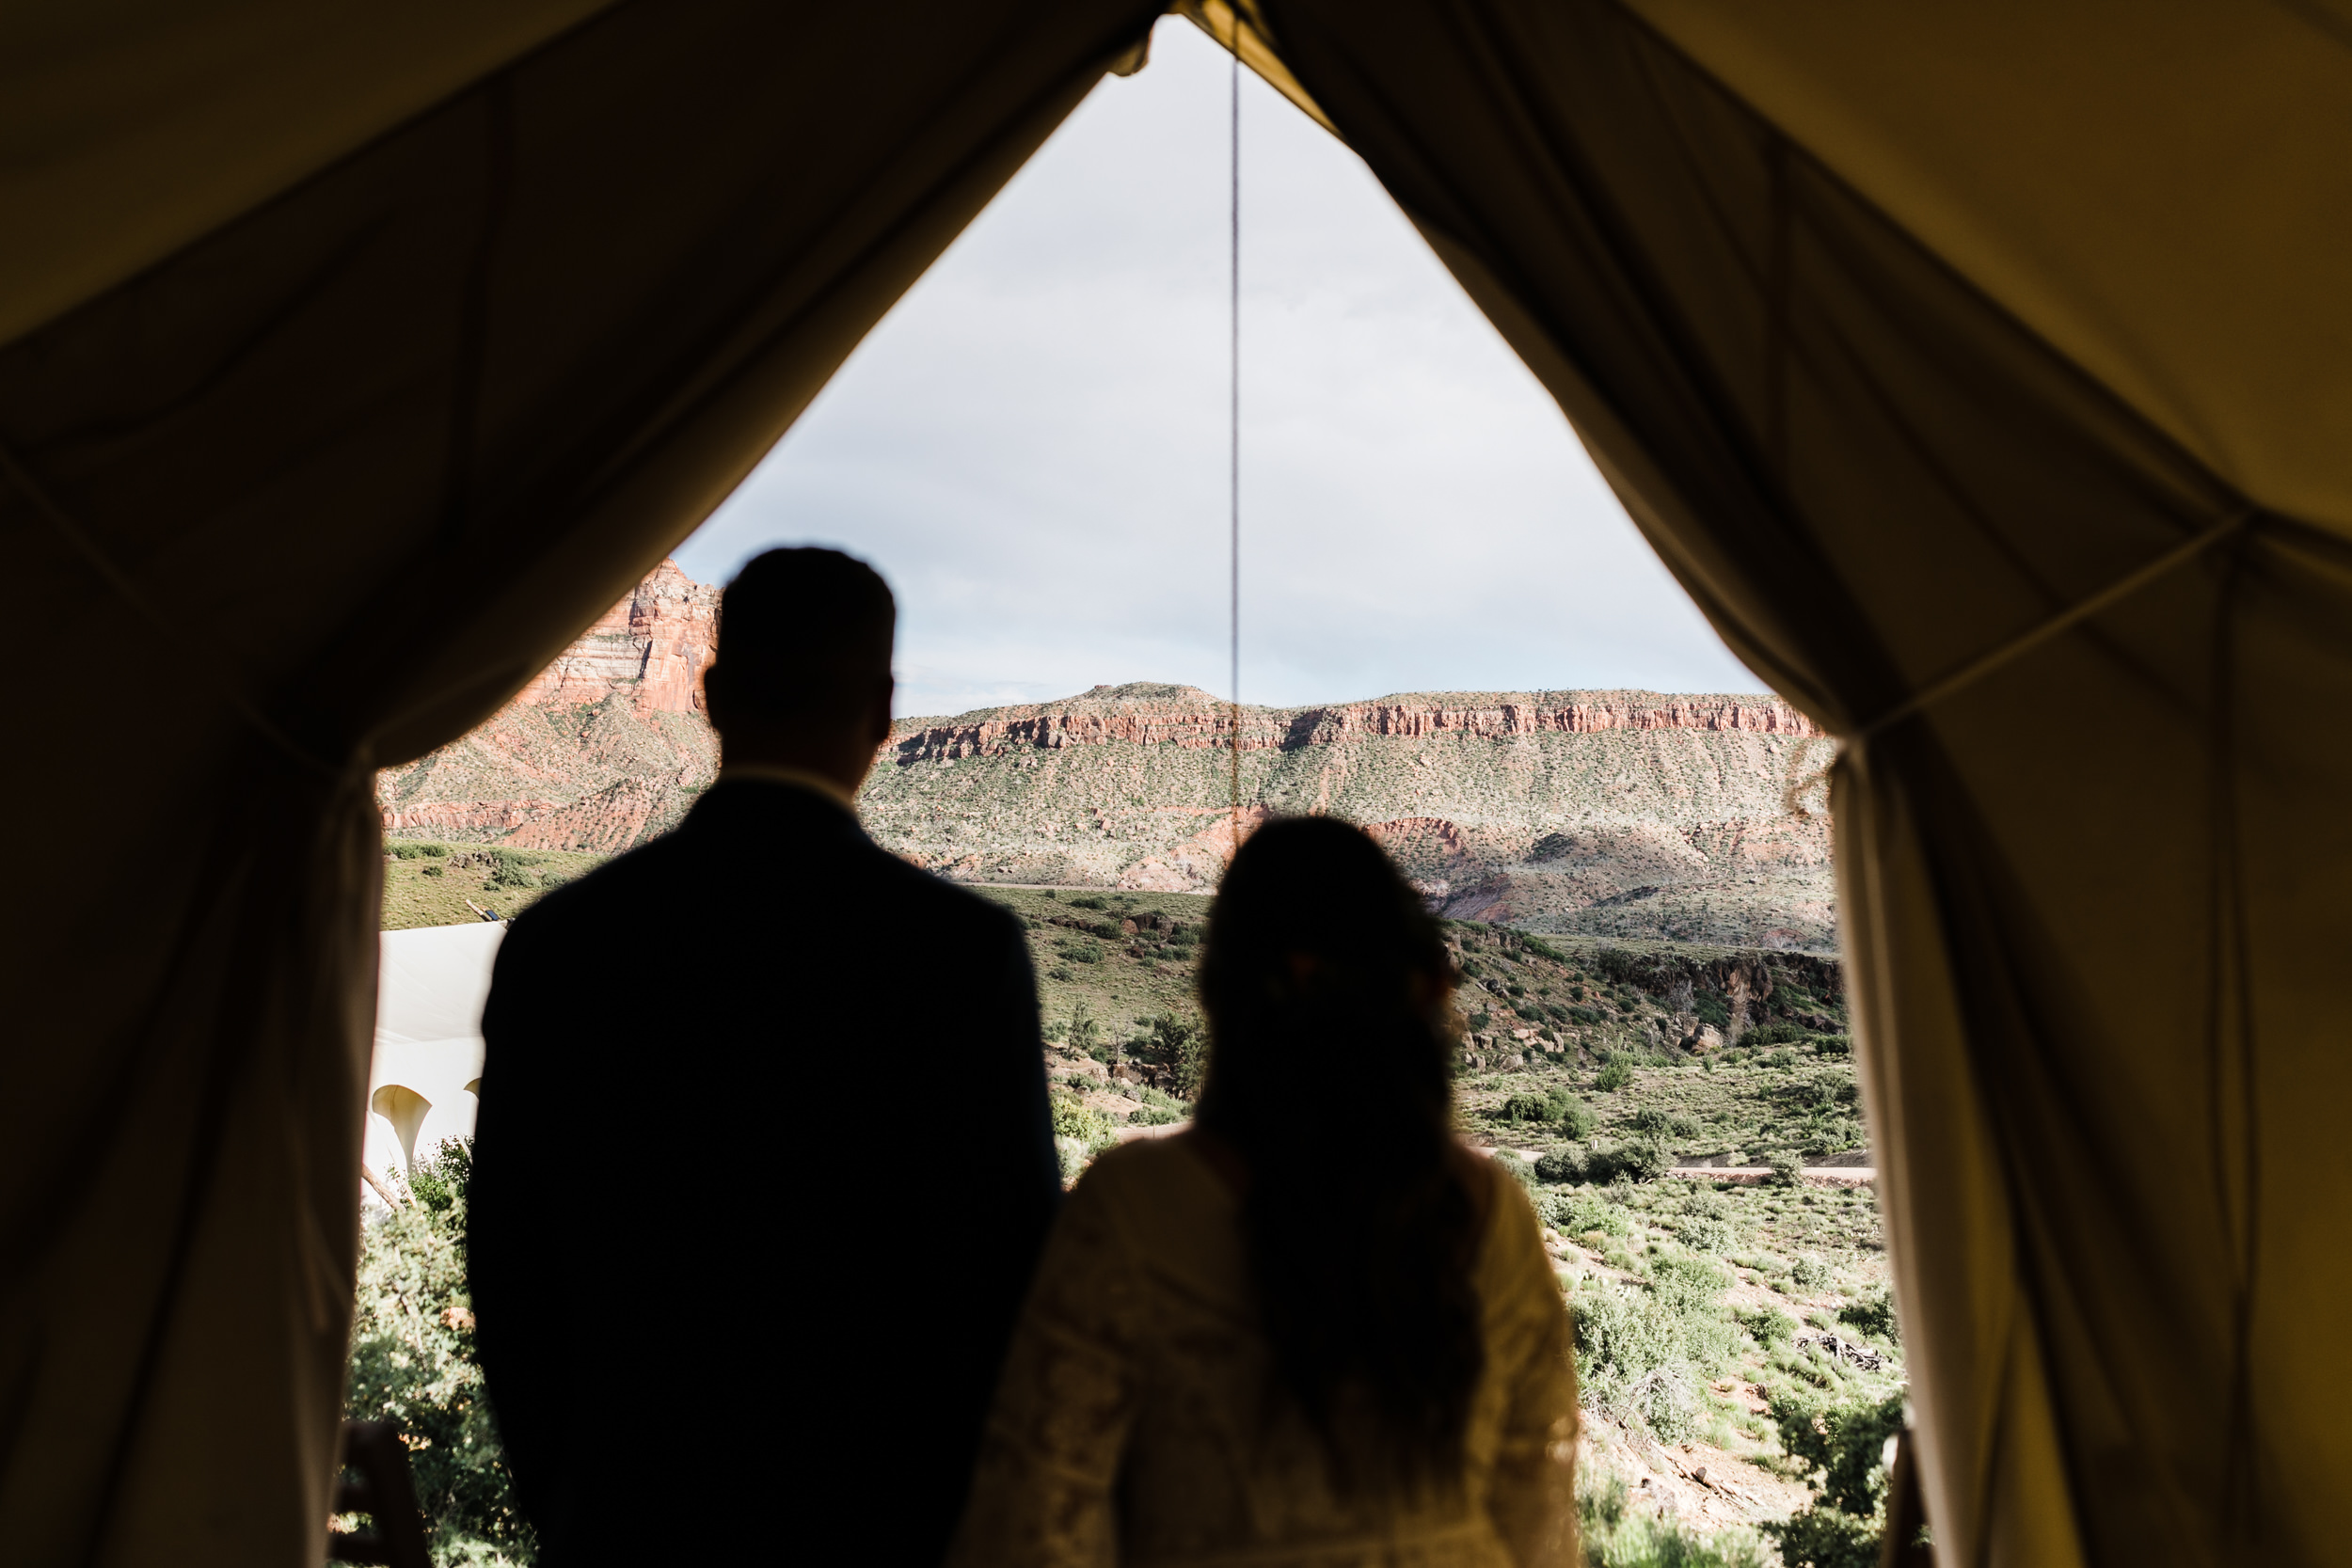 Zion national park elopement photographer | under canvas wedding | the hearnes adventure photography